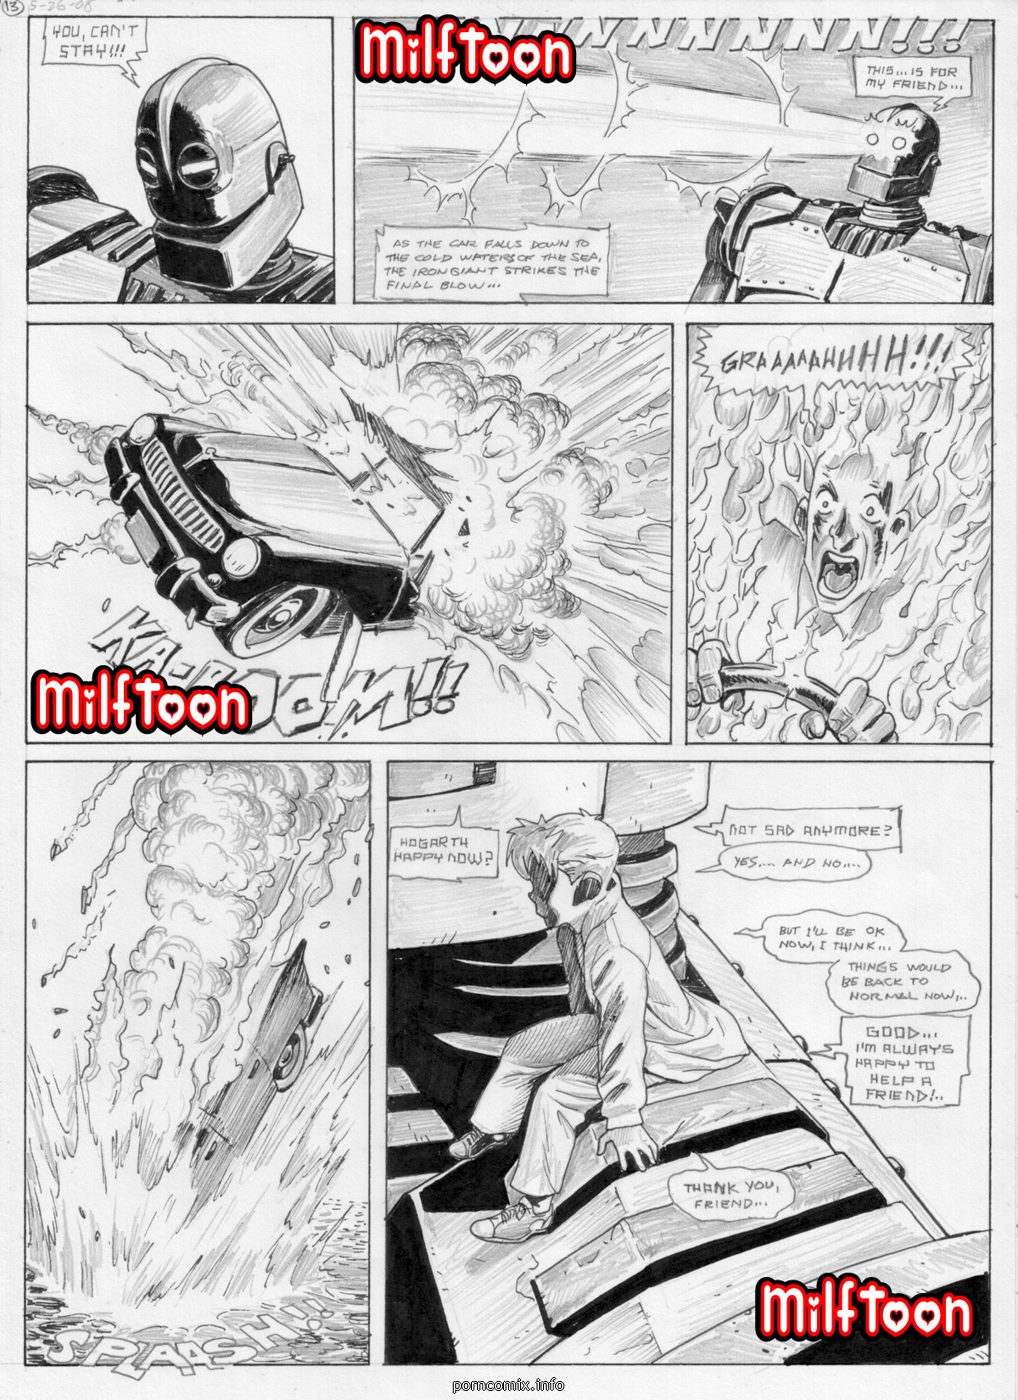 Iron Giant Shadbase Porn - Iron Giant 2 â€“ Milftoon - Comics Army